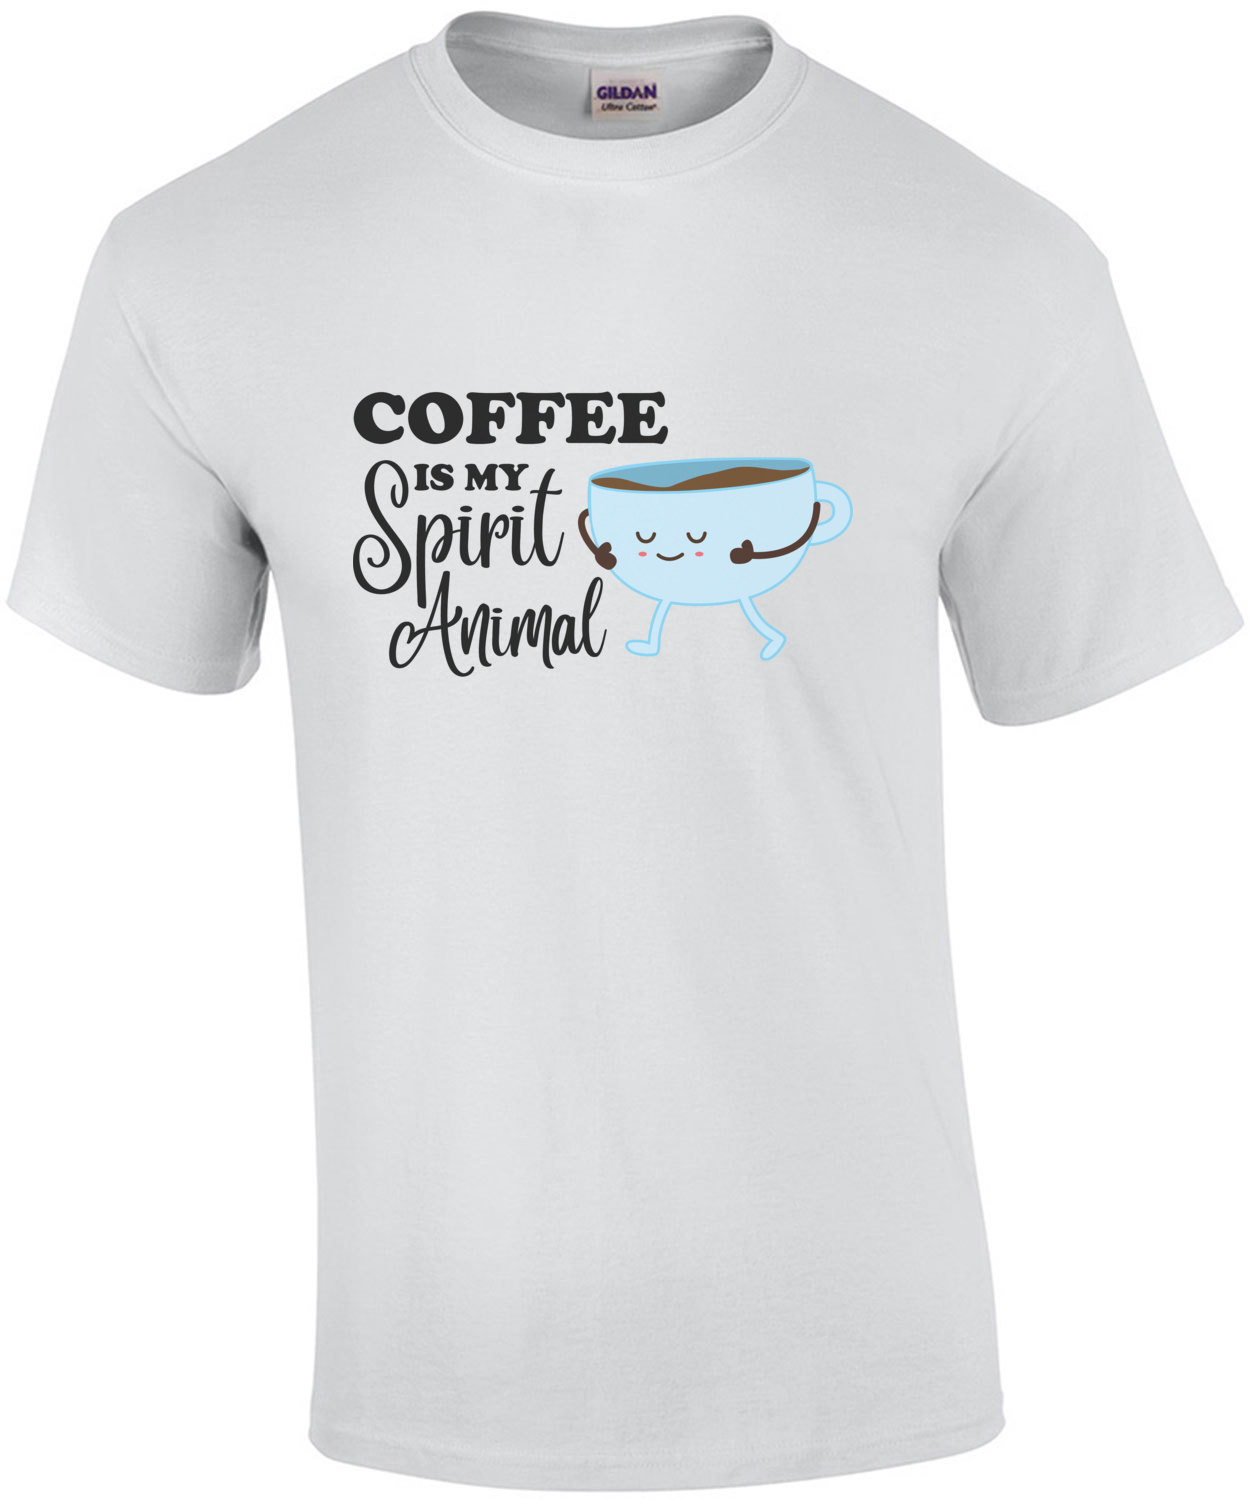 Coffee is my spirit animal - funny coffee t-shirt